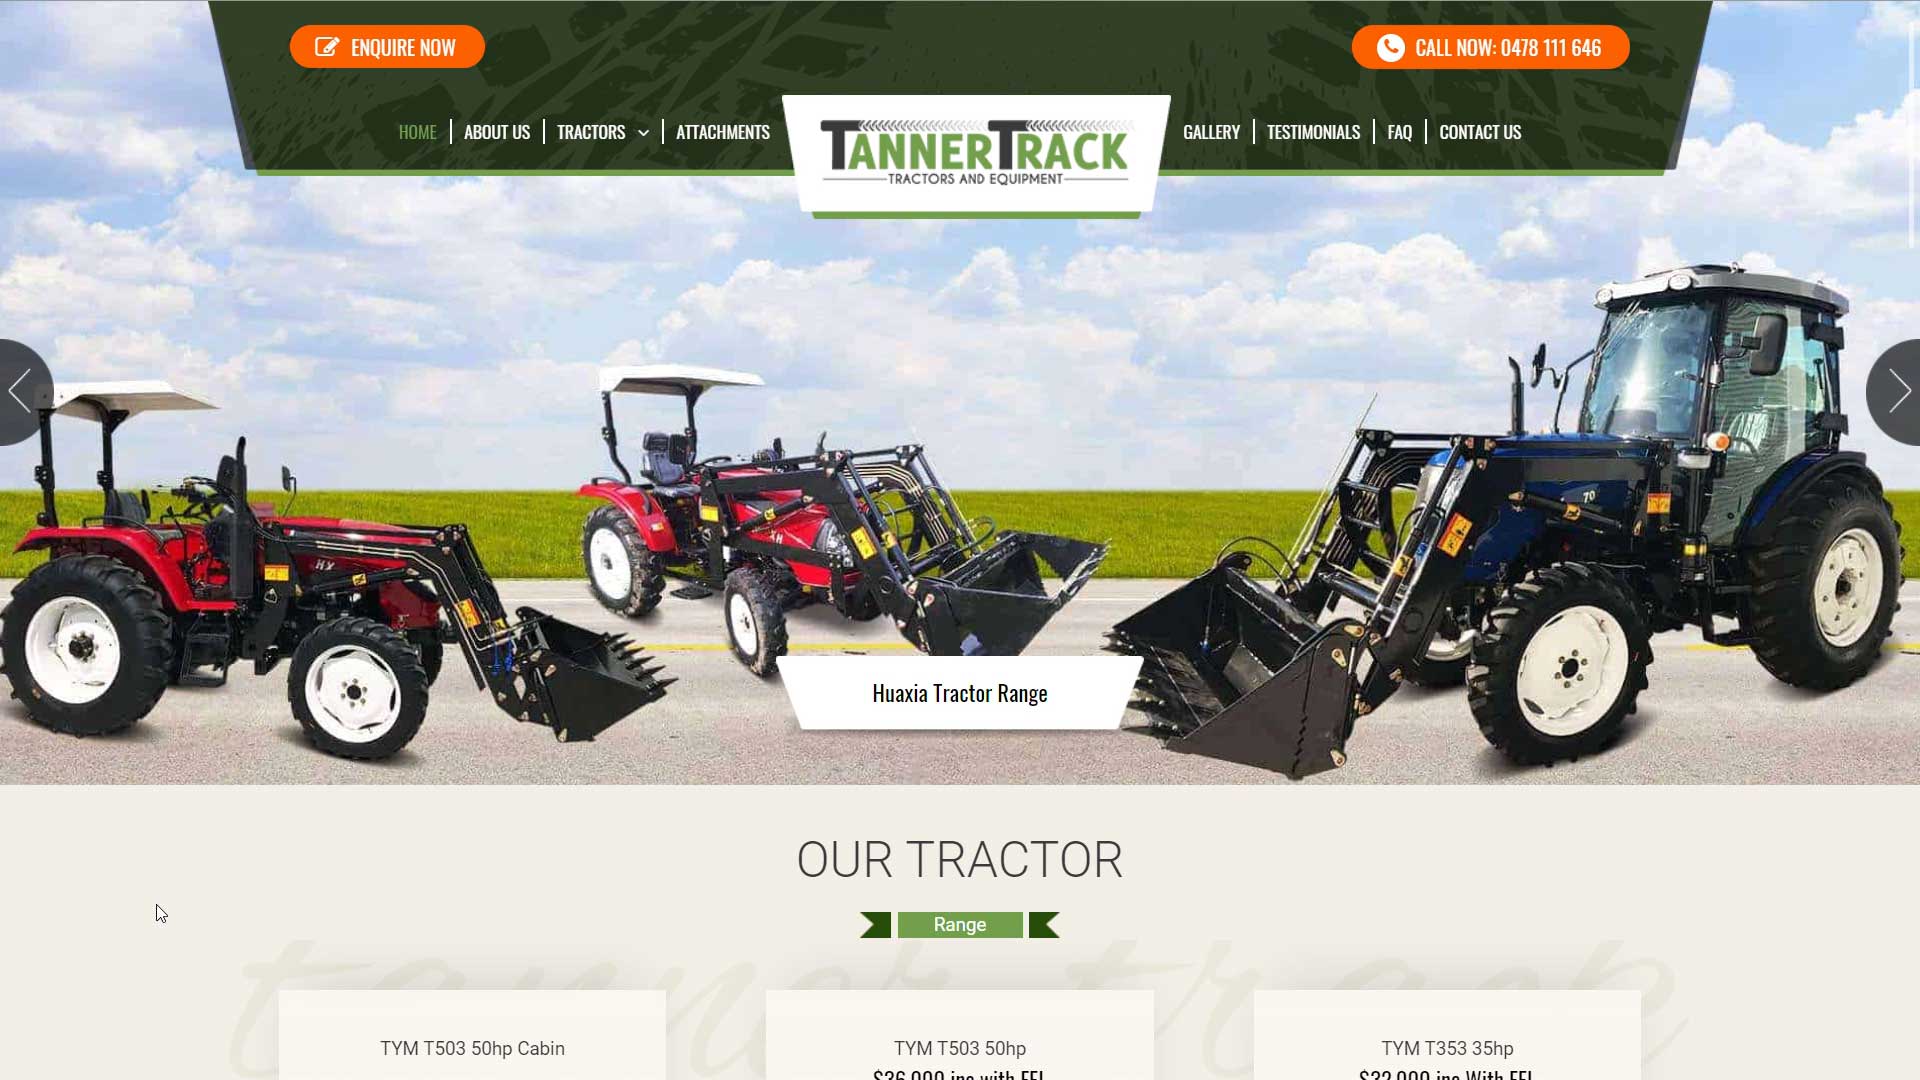 Tanner Track website before